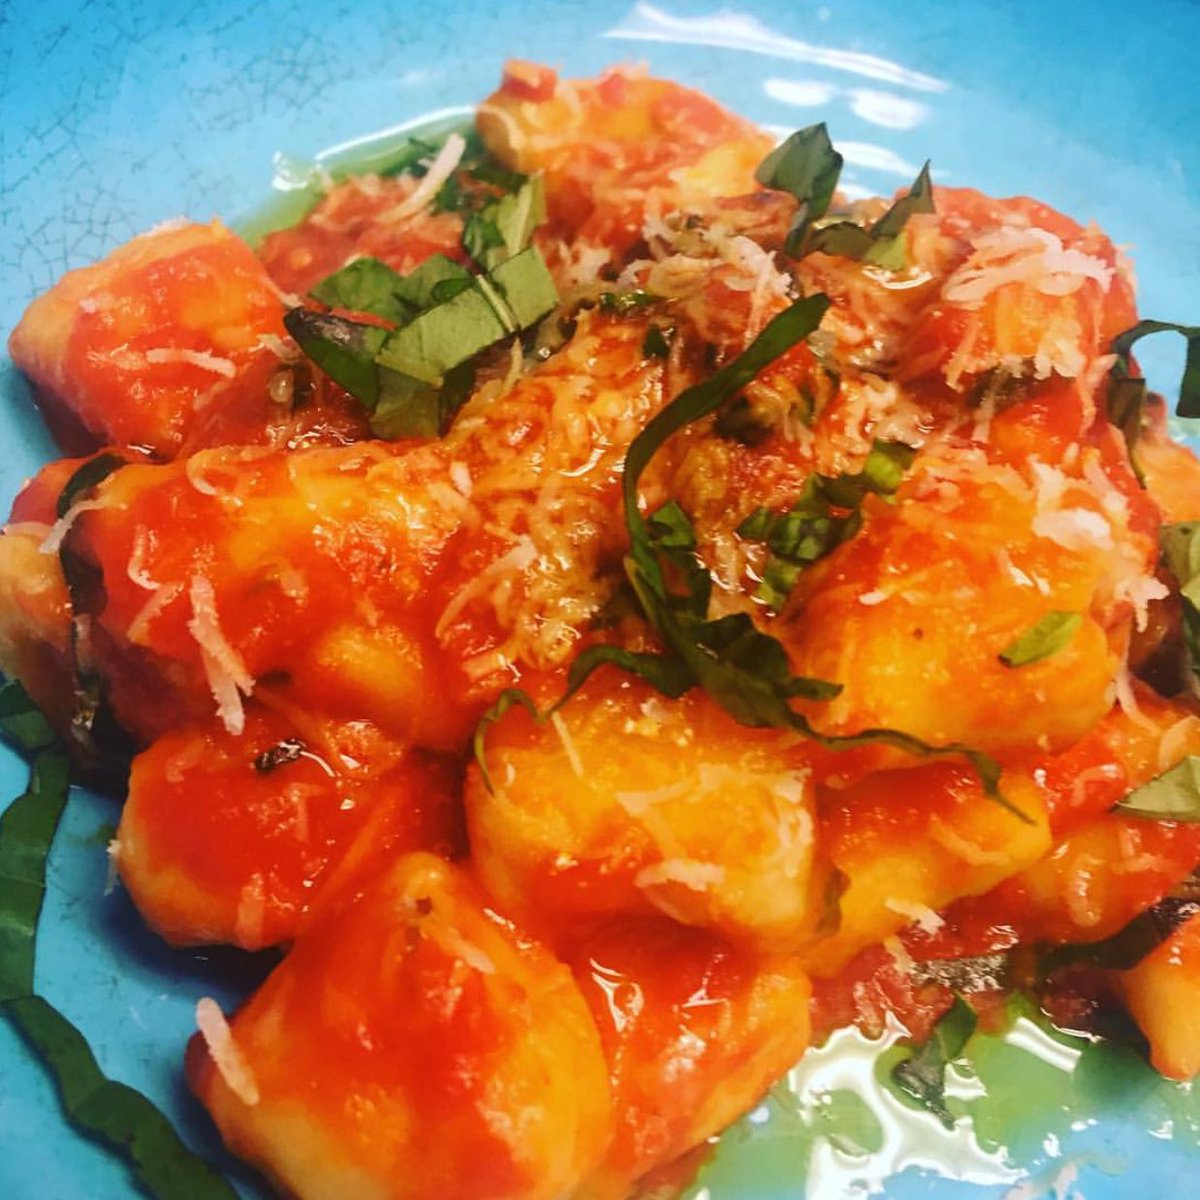 Homemade #gnocchi al pomodoro #sanmarzano #pizzeriasofia #chefalessio #italianfood #sundaynight